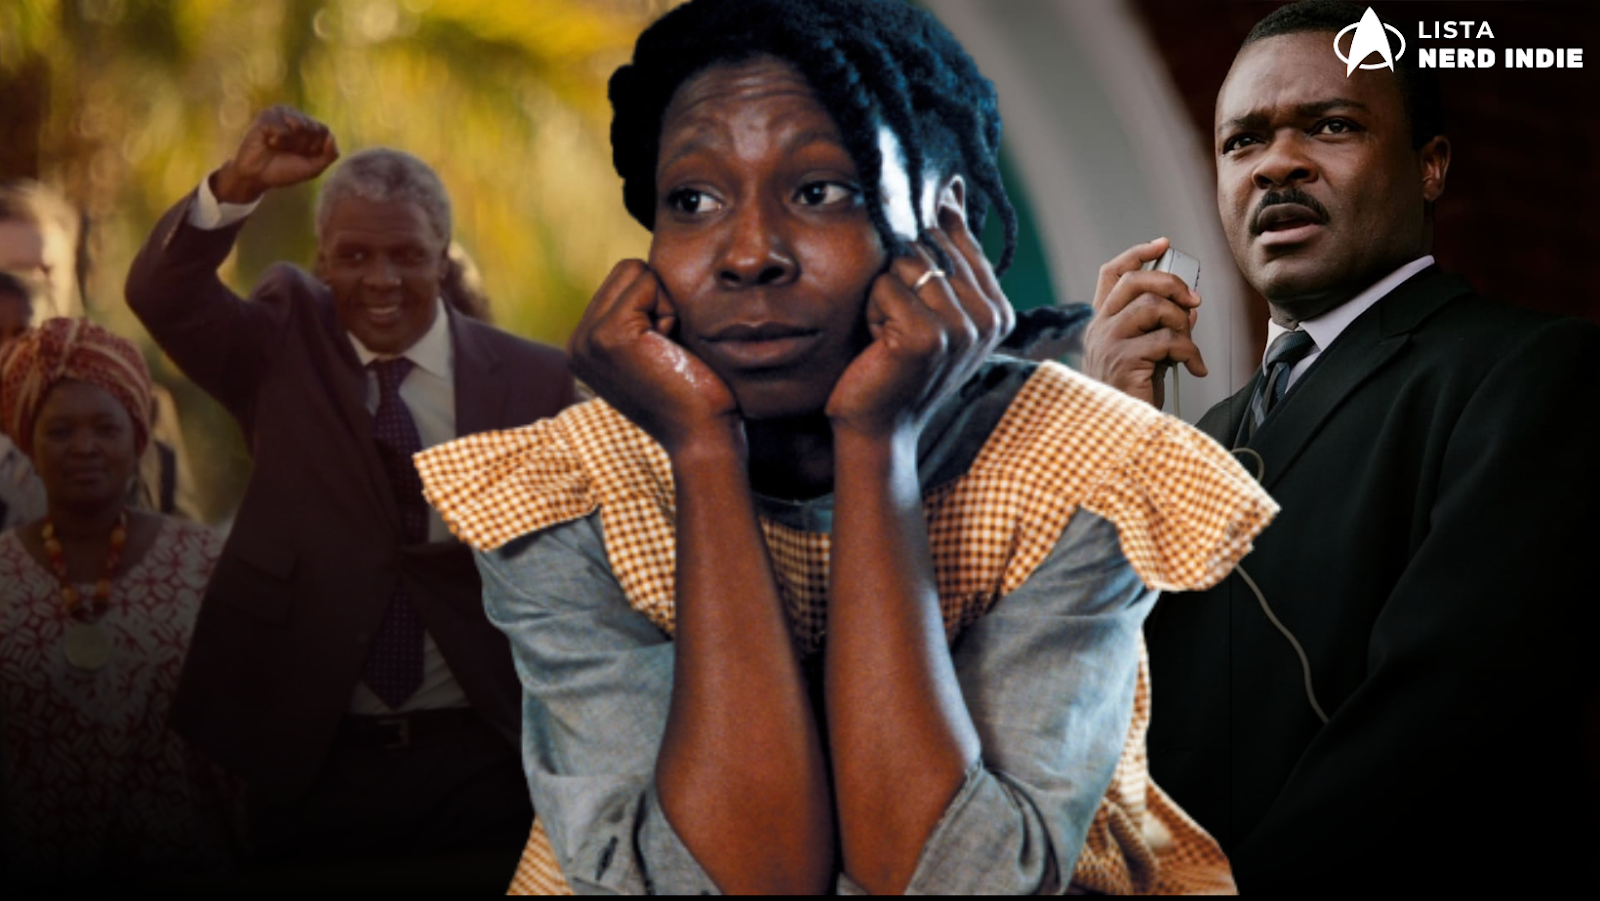 Filmes Que Abordam o Empoderamento Negro na Sociedade